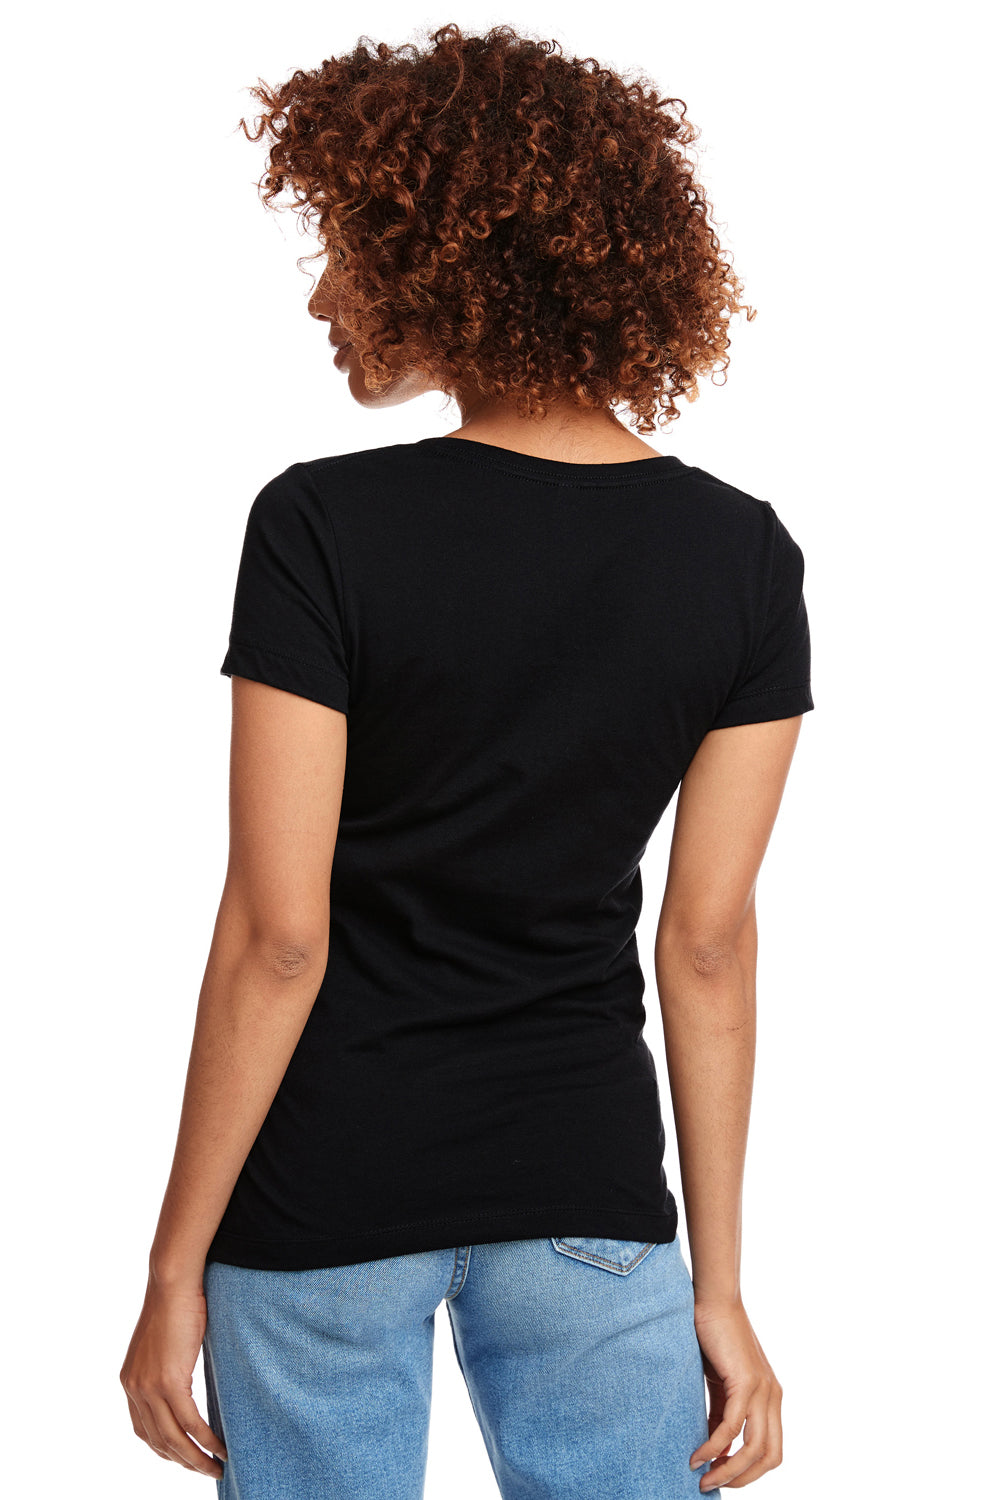 Next Level N1540 Womens Ideal Jersey Short Sleeve V-Neck T-Shirt Black Back